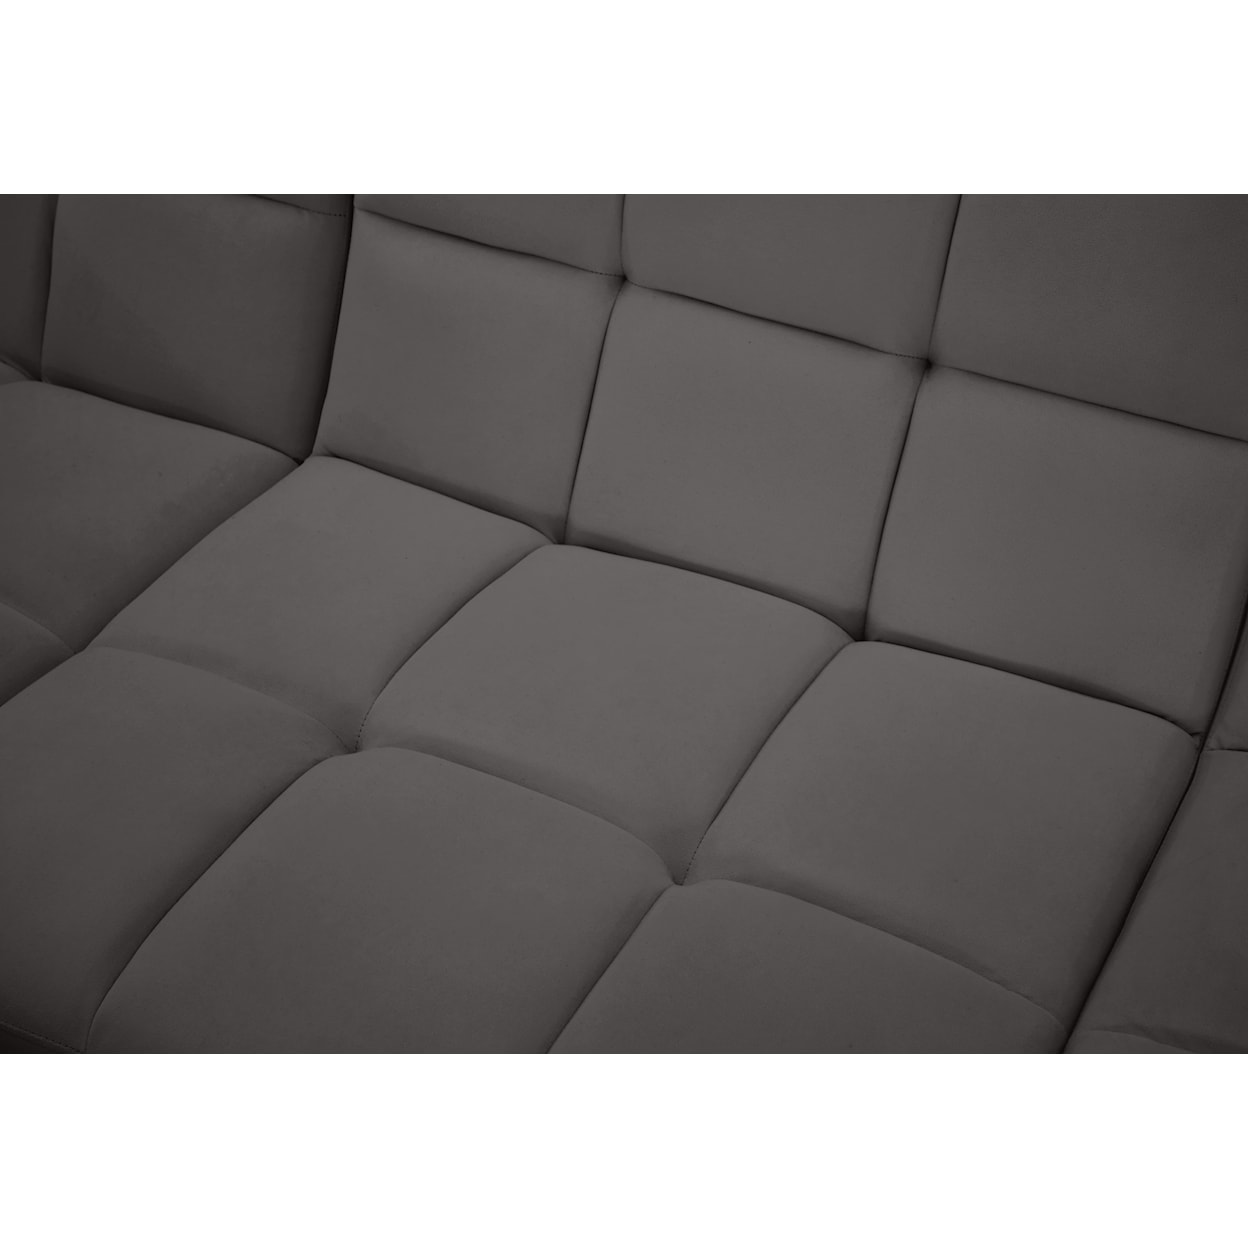 Meridian Furniture Relax Modular Sofa